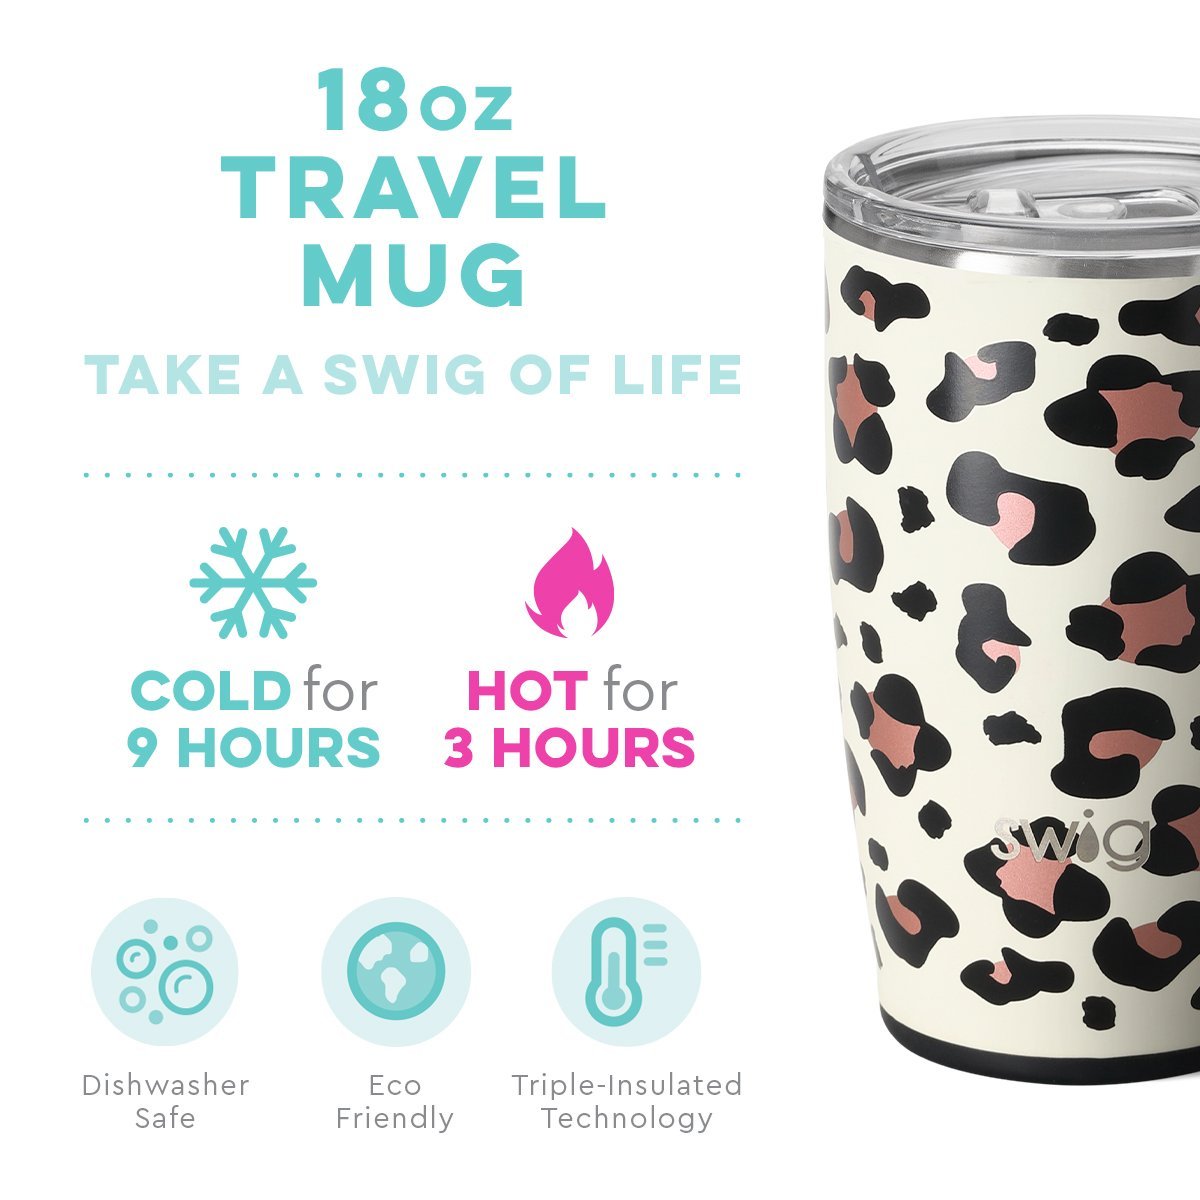 Swig Travel Mug with Handle - 18oz – Tricia's Treasures